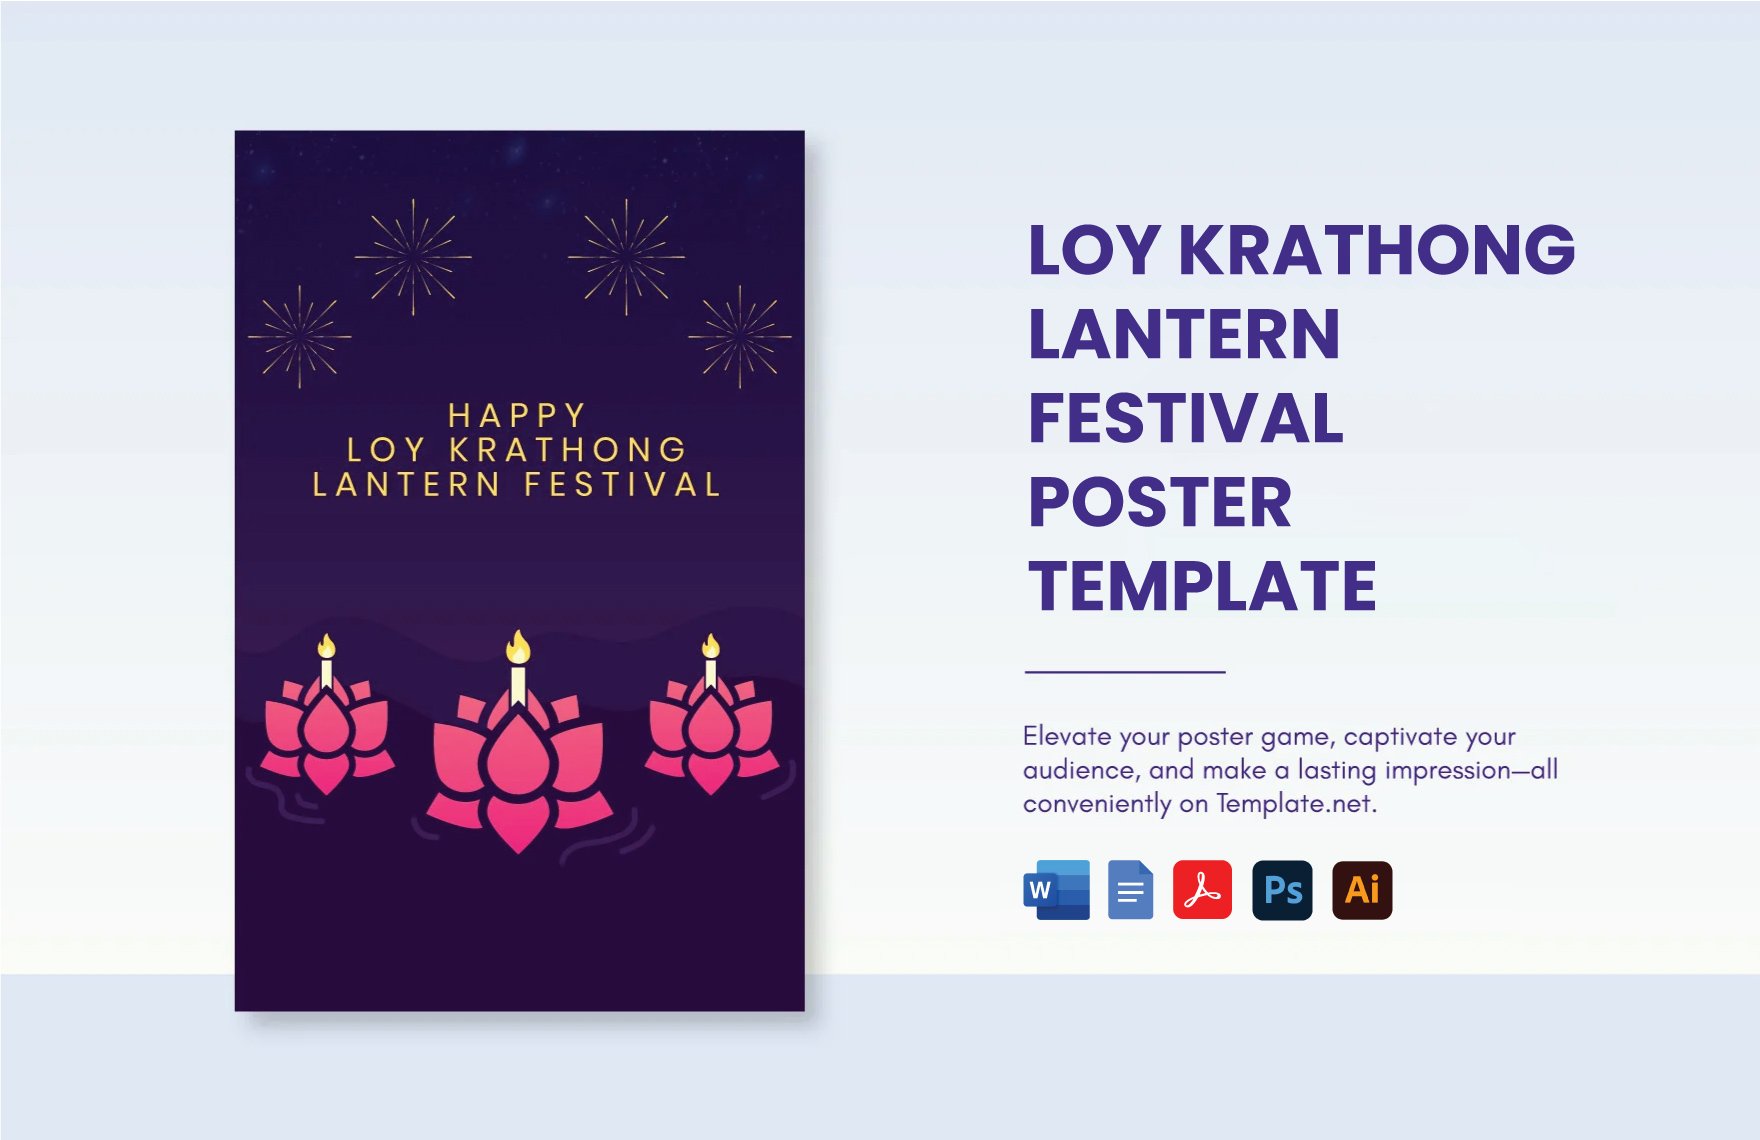 Loy Krathong Lantern Festival Poster Template in Word, Google Docs, PDF, Illustrator, PSD